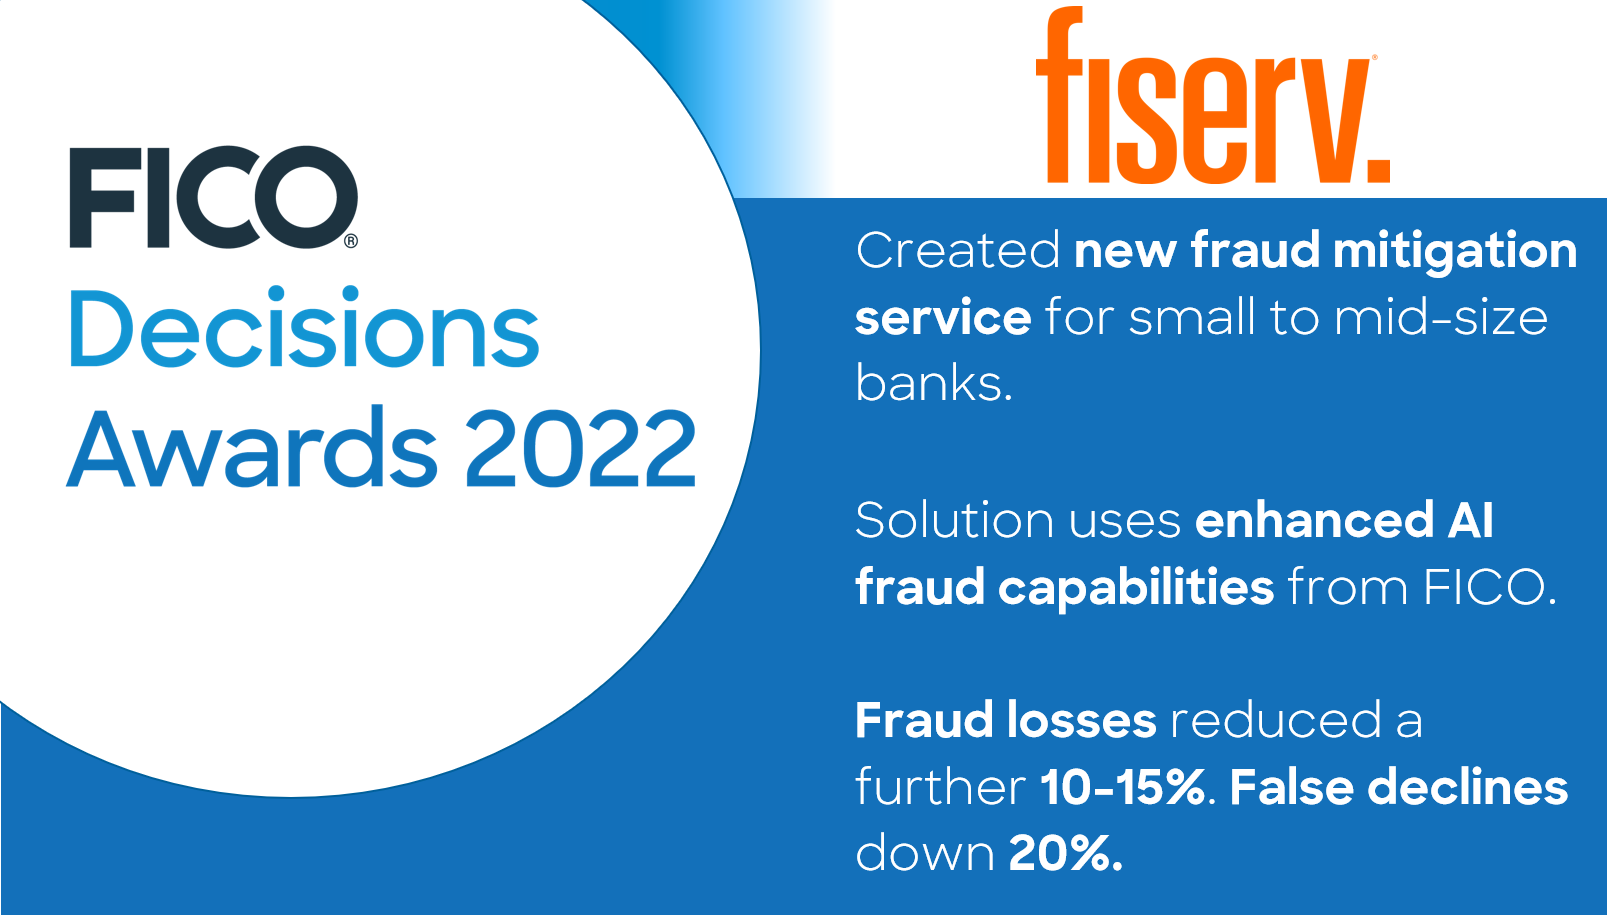 Fiserv Reduces Fraud Losses